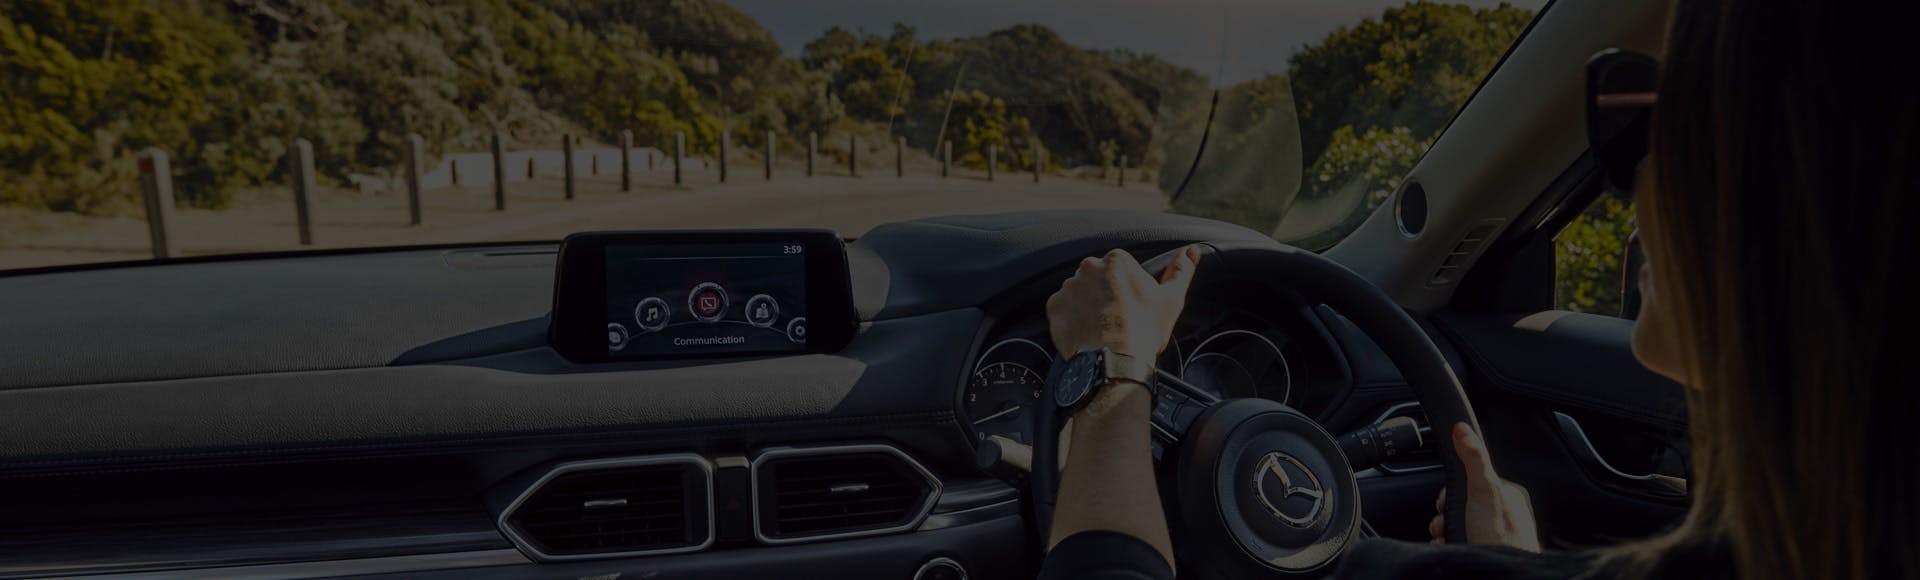 Mazda Premium Roadside Assistance